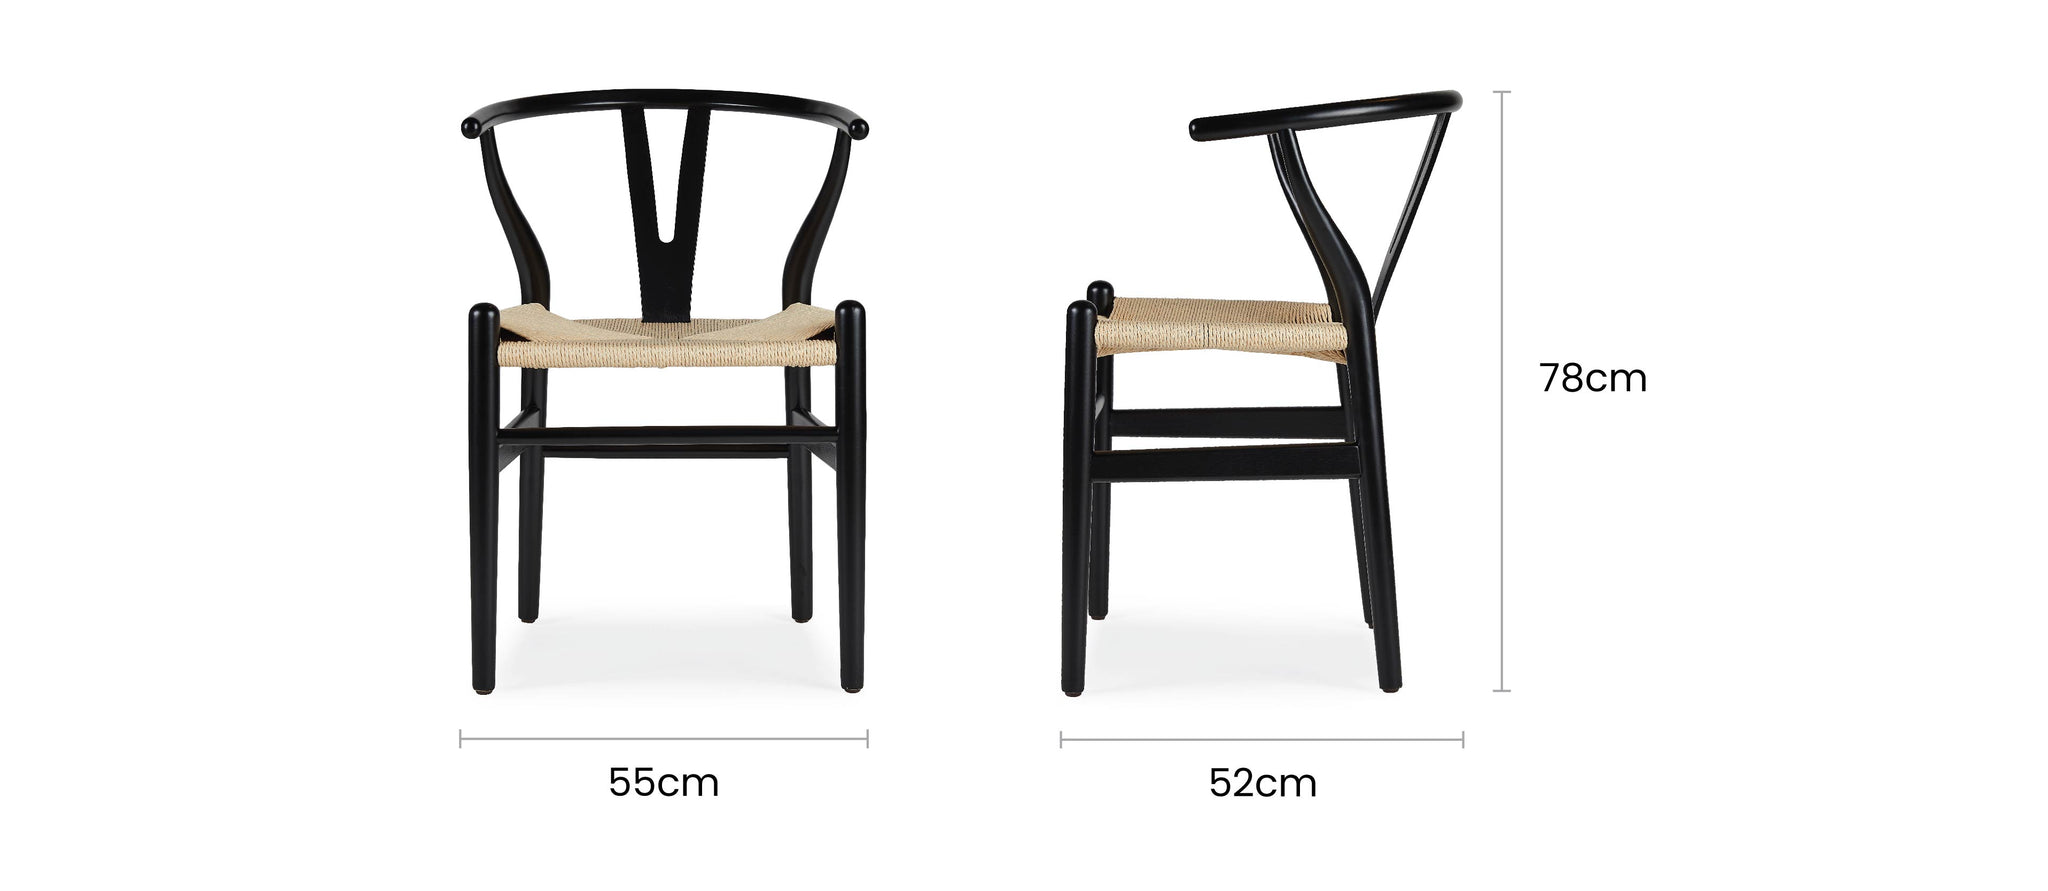 Wishbone Chair Dimensions